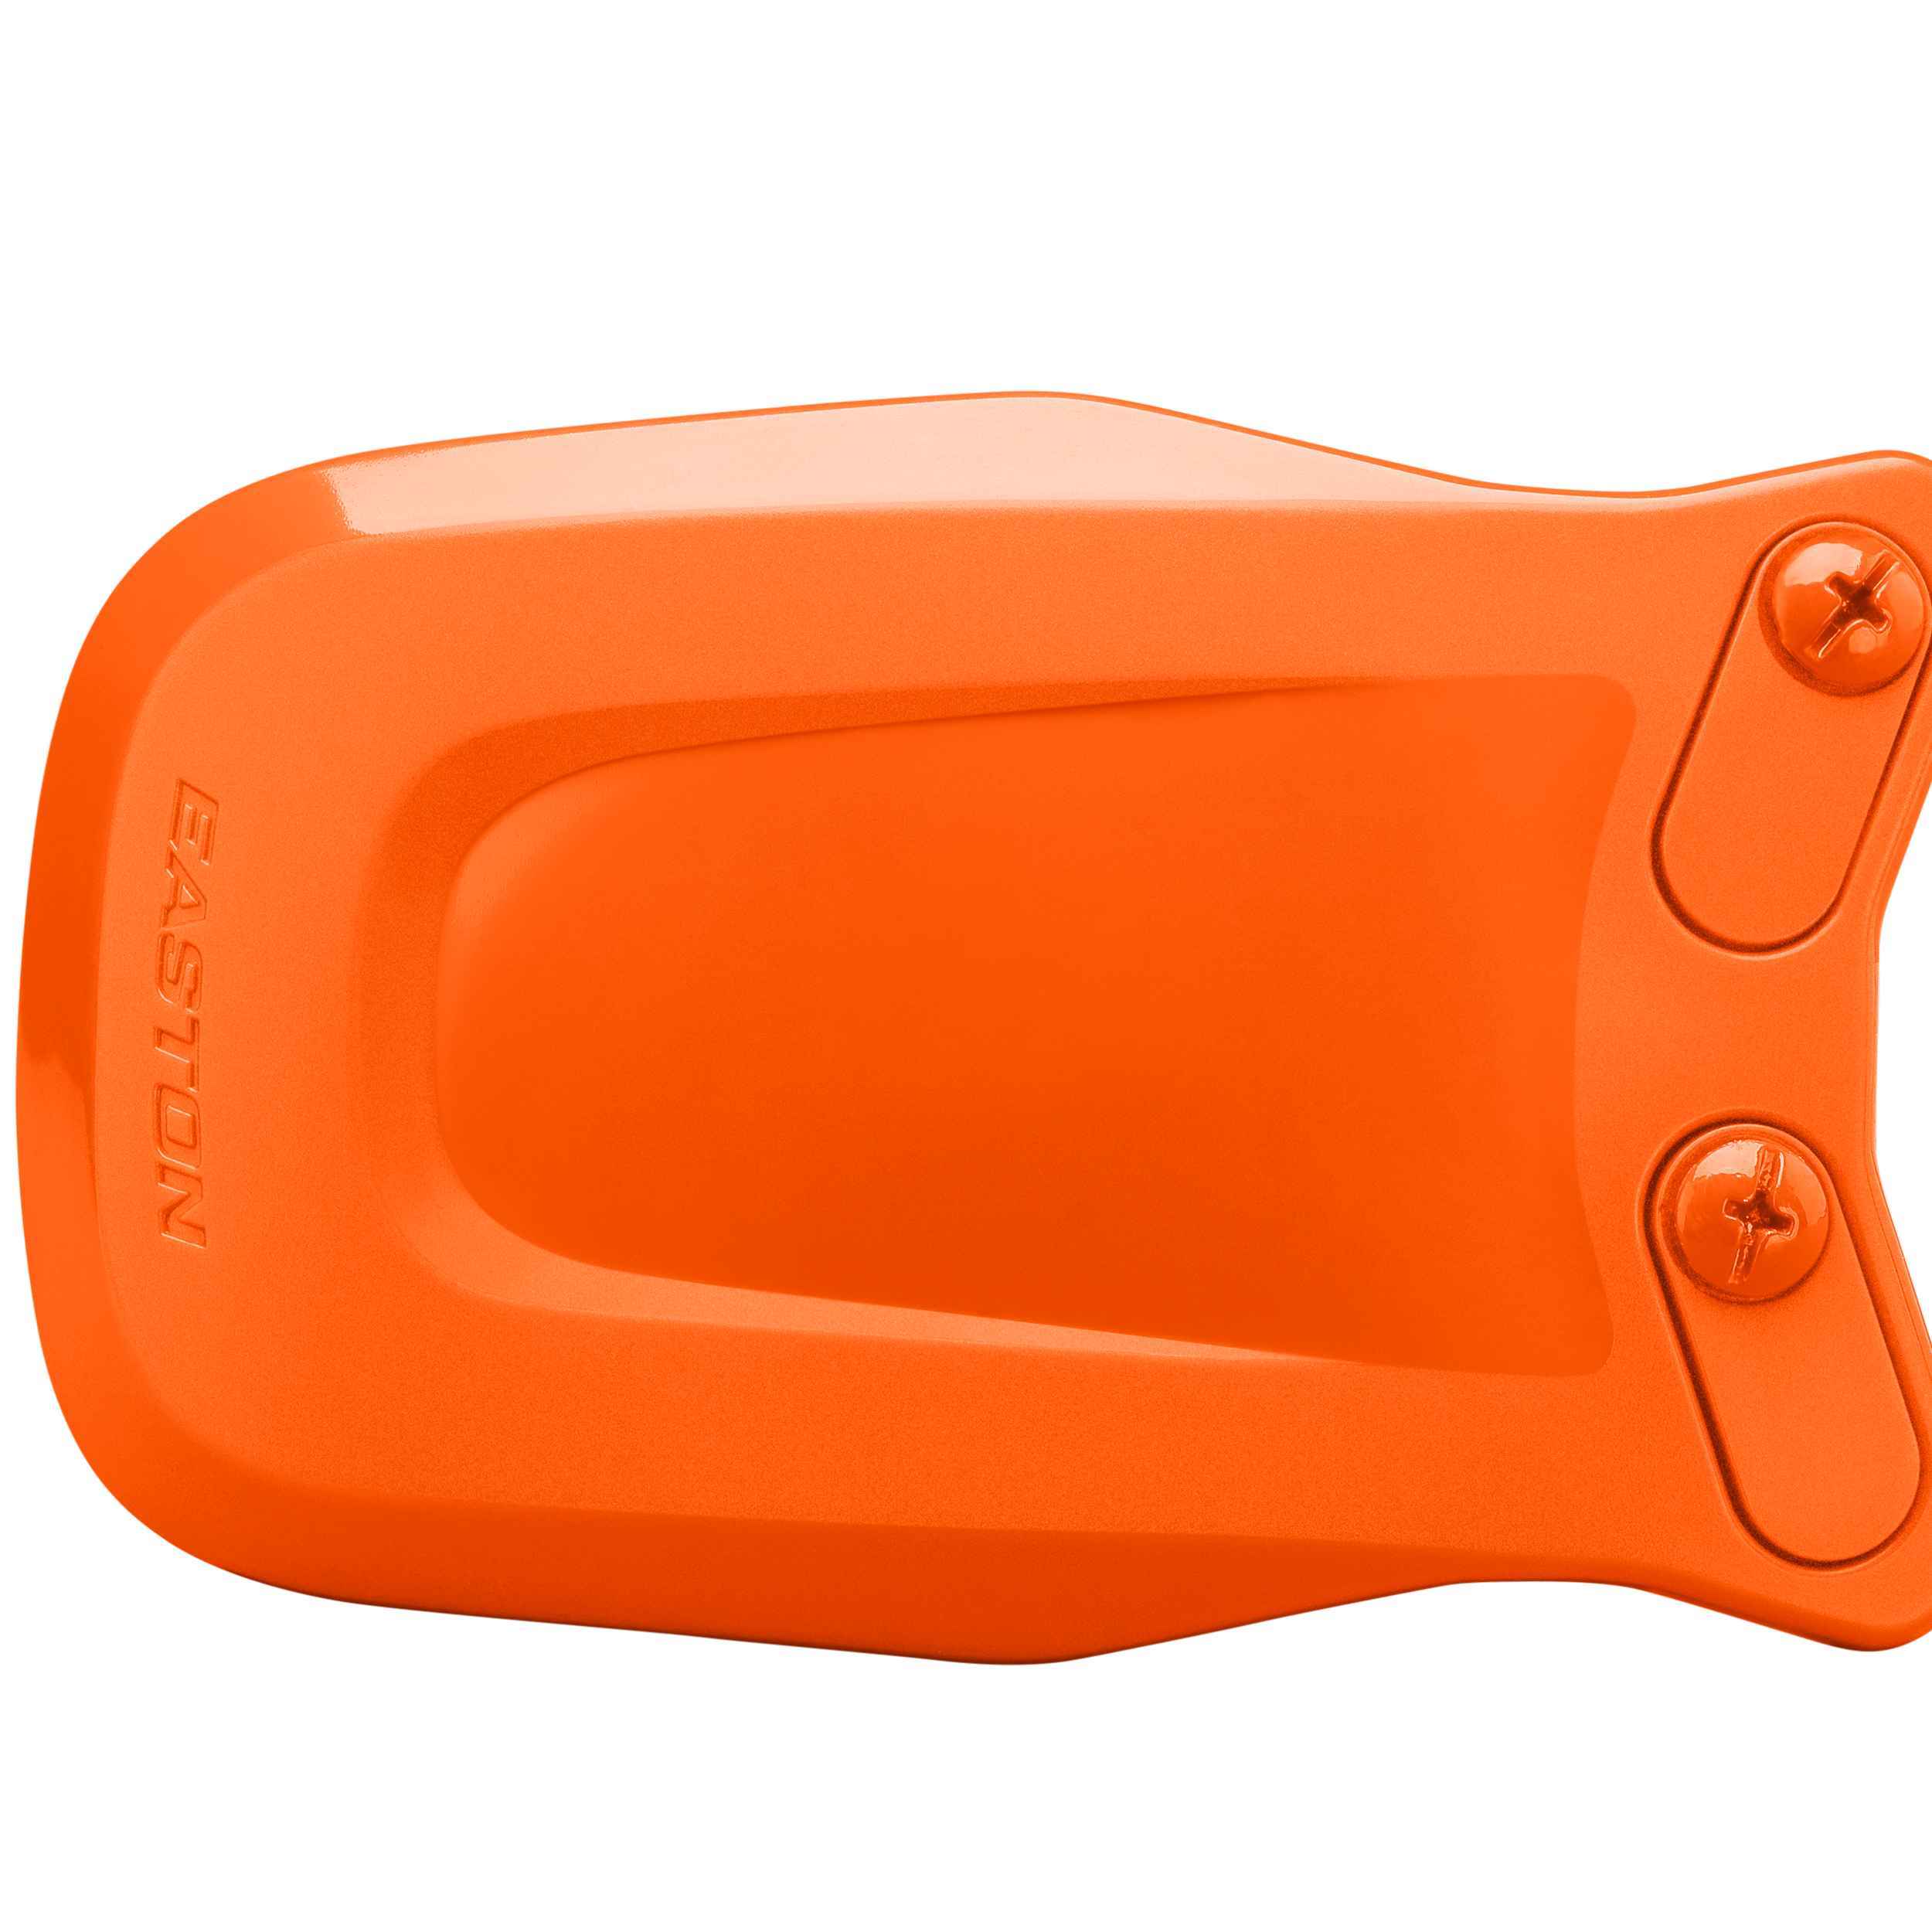 Easton Universal Jaw Guard | Orange | Any - image 1 of 2